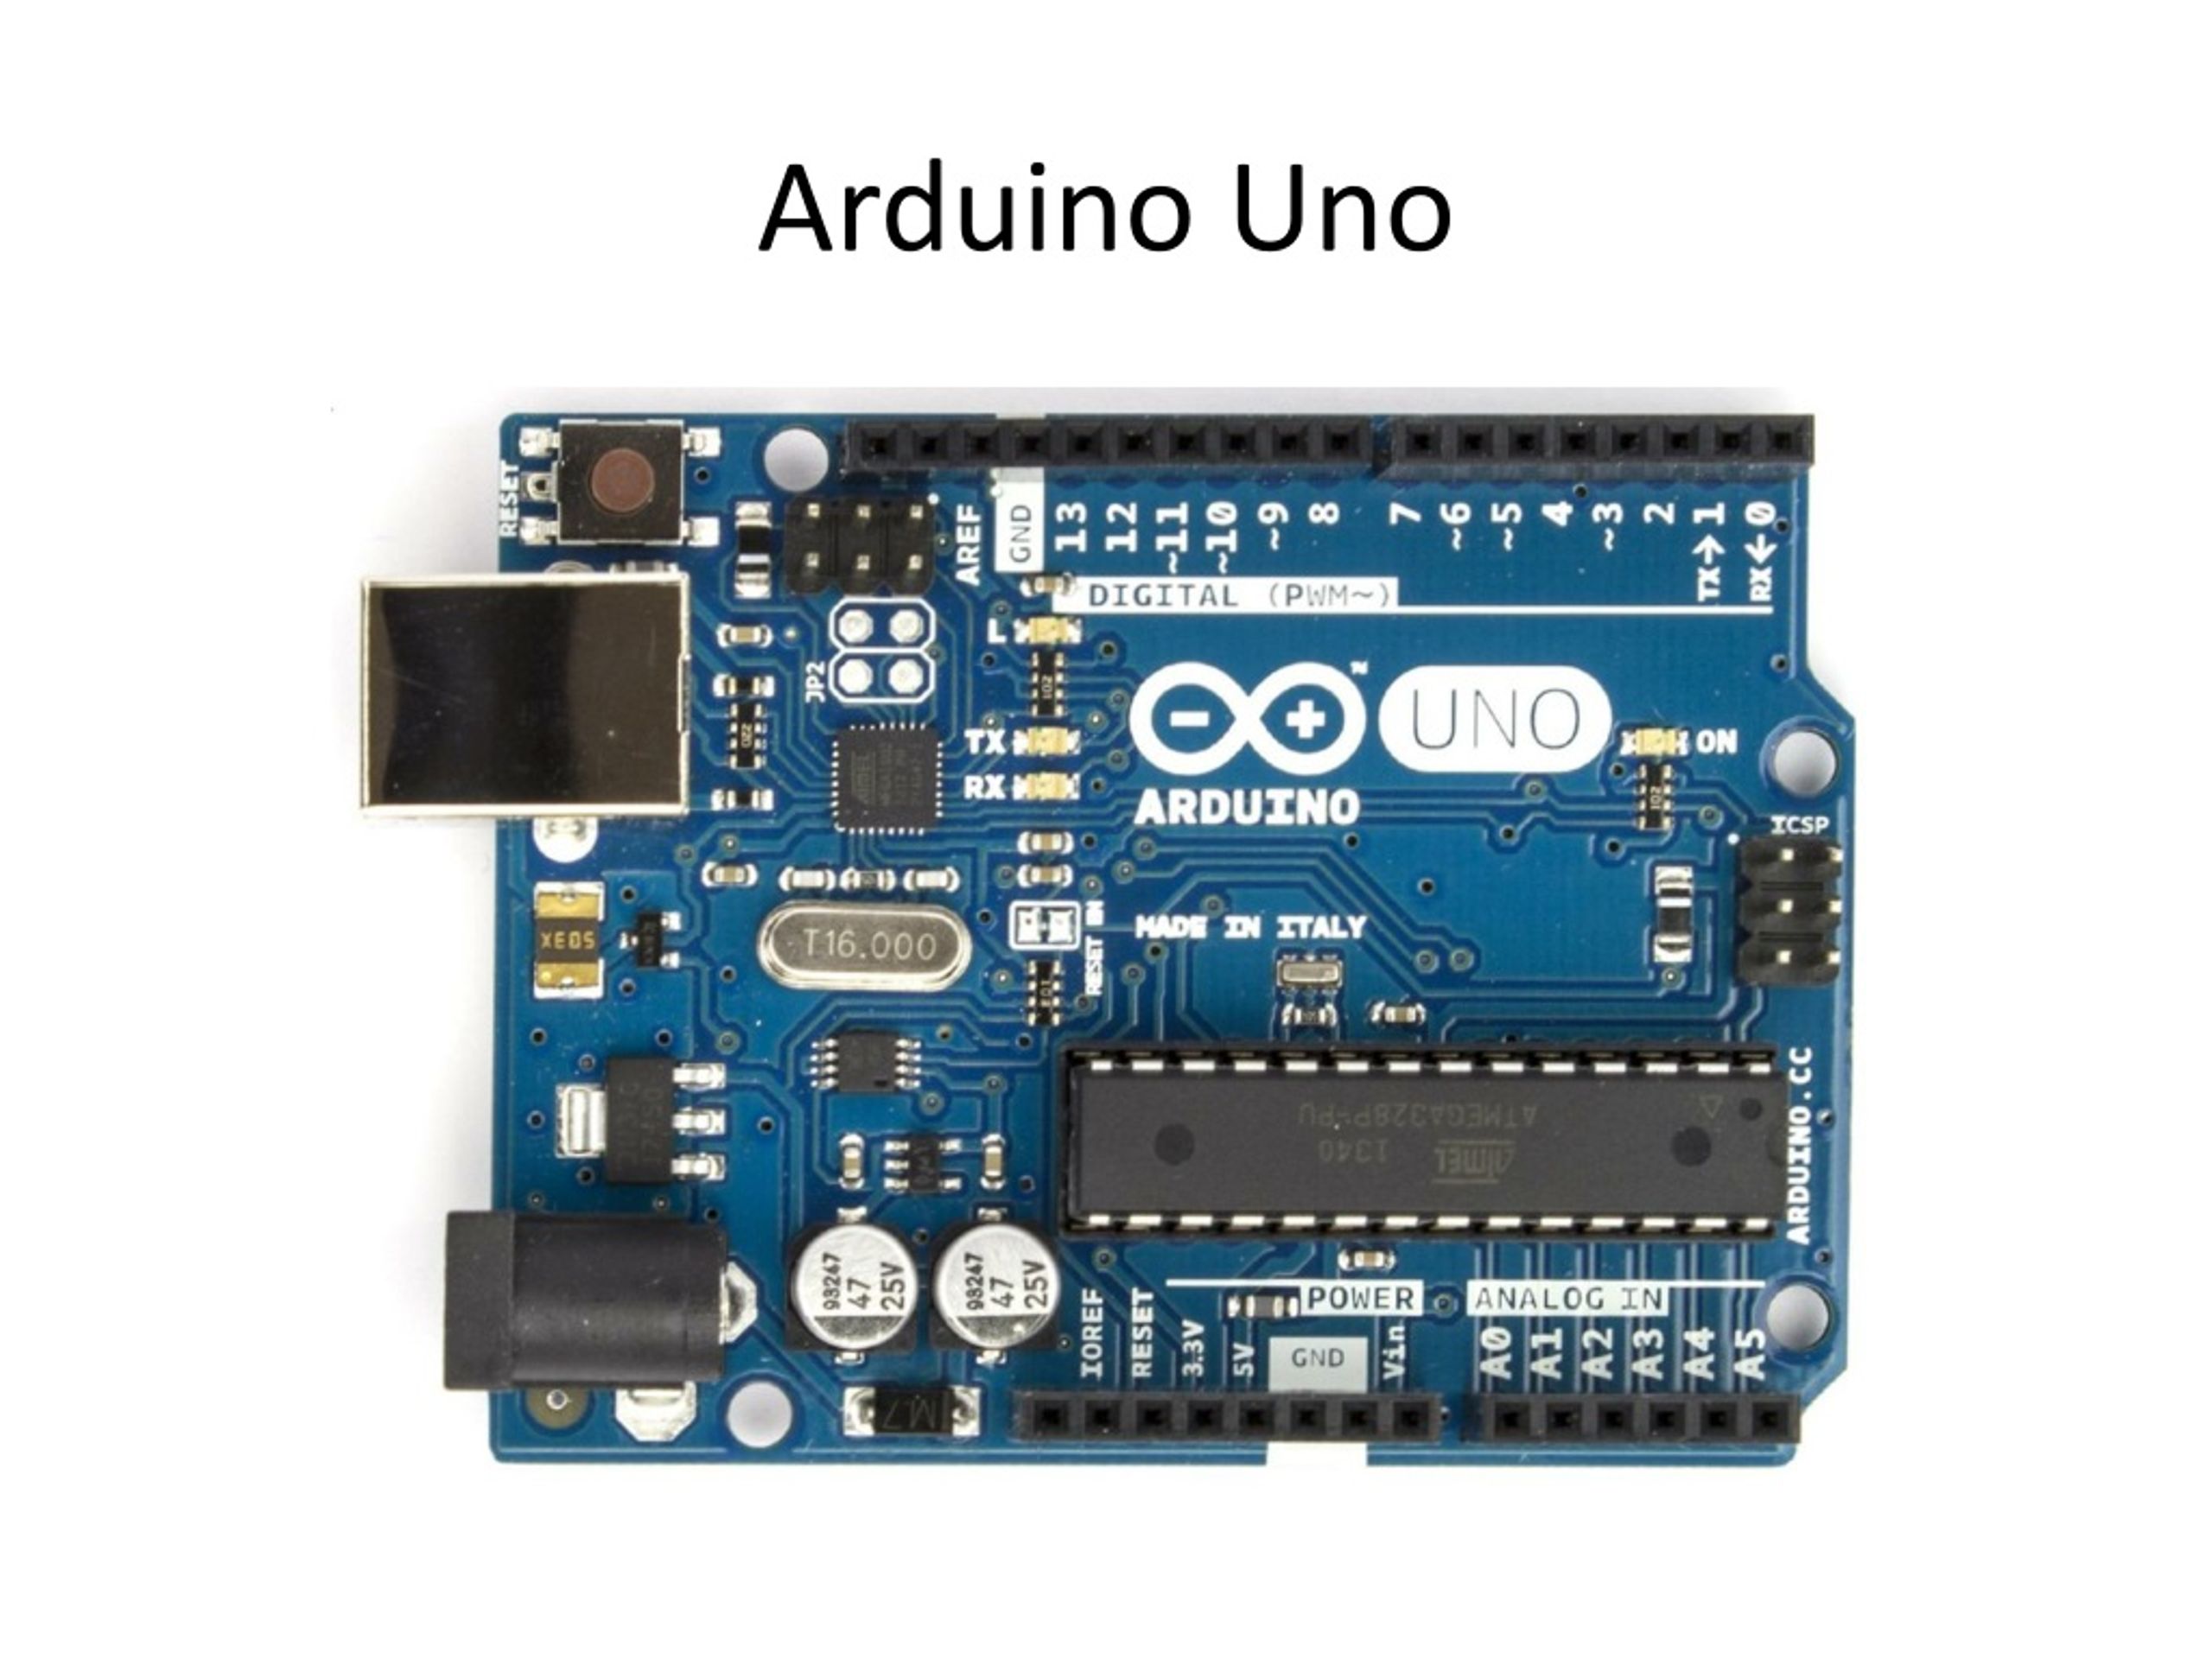 Ppt Arduino Uno Powerpoint Presentation Free Download Id8809185 3285